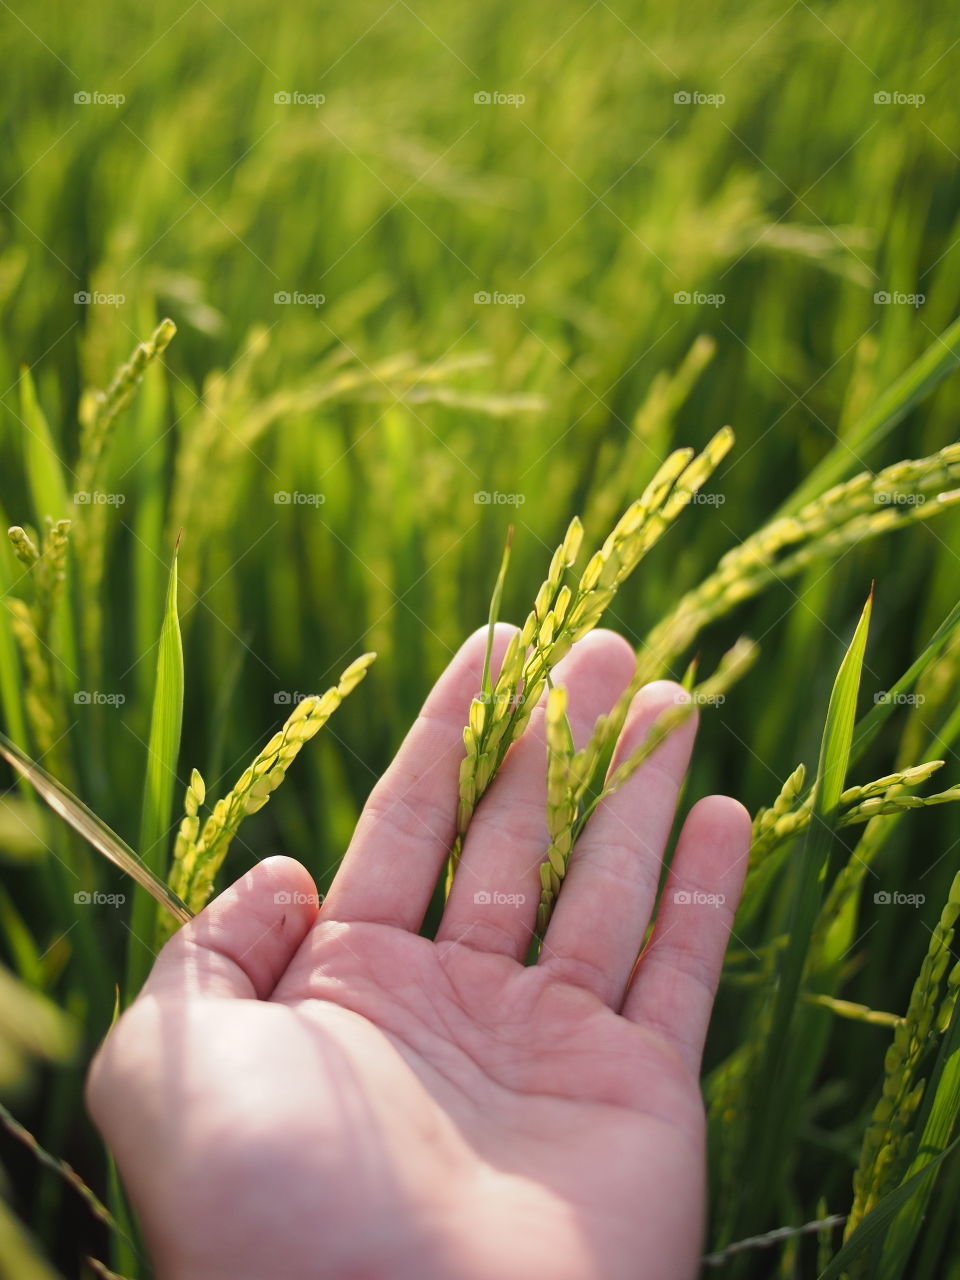 Rice field on my hand